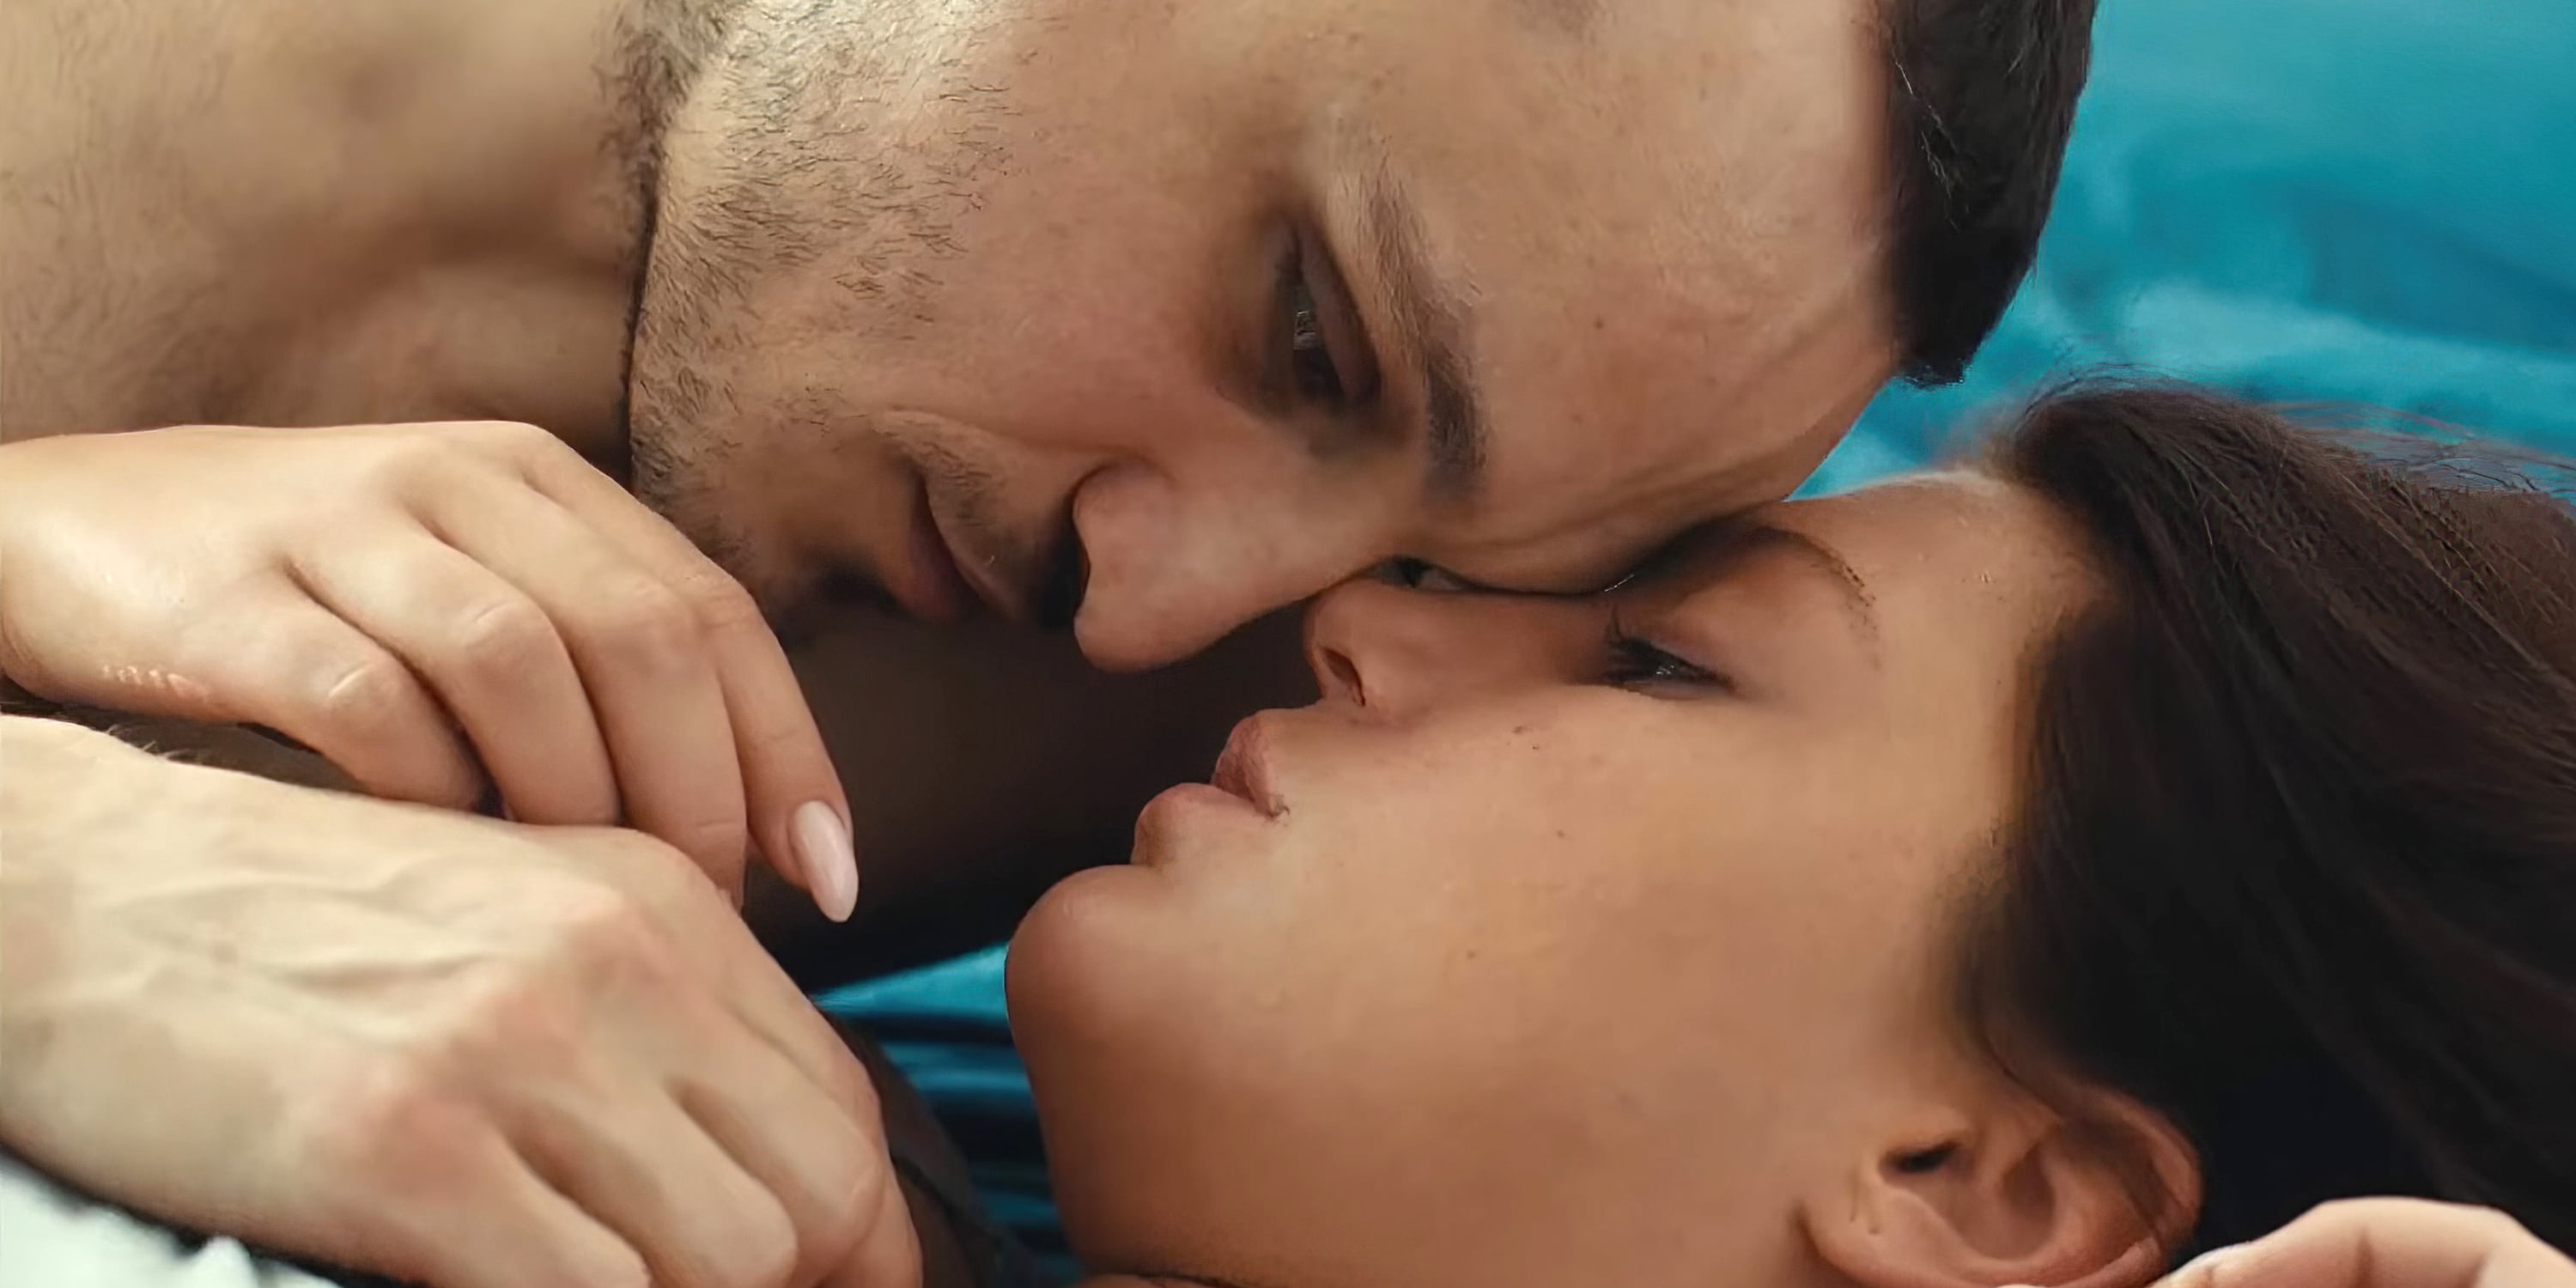 Romantic Sus Pence Sex Videos - Best NC-17 Movies to Watch | POPSUGAR Love & Sex